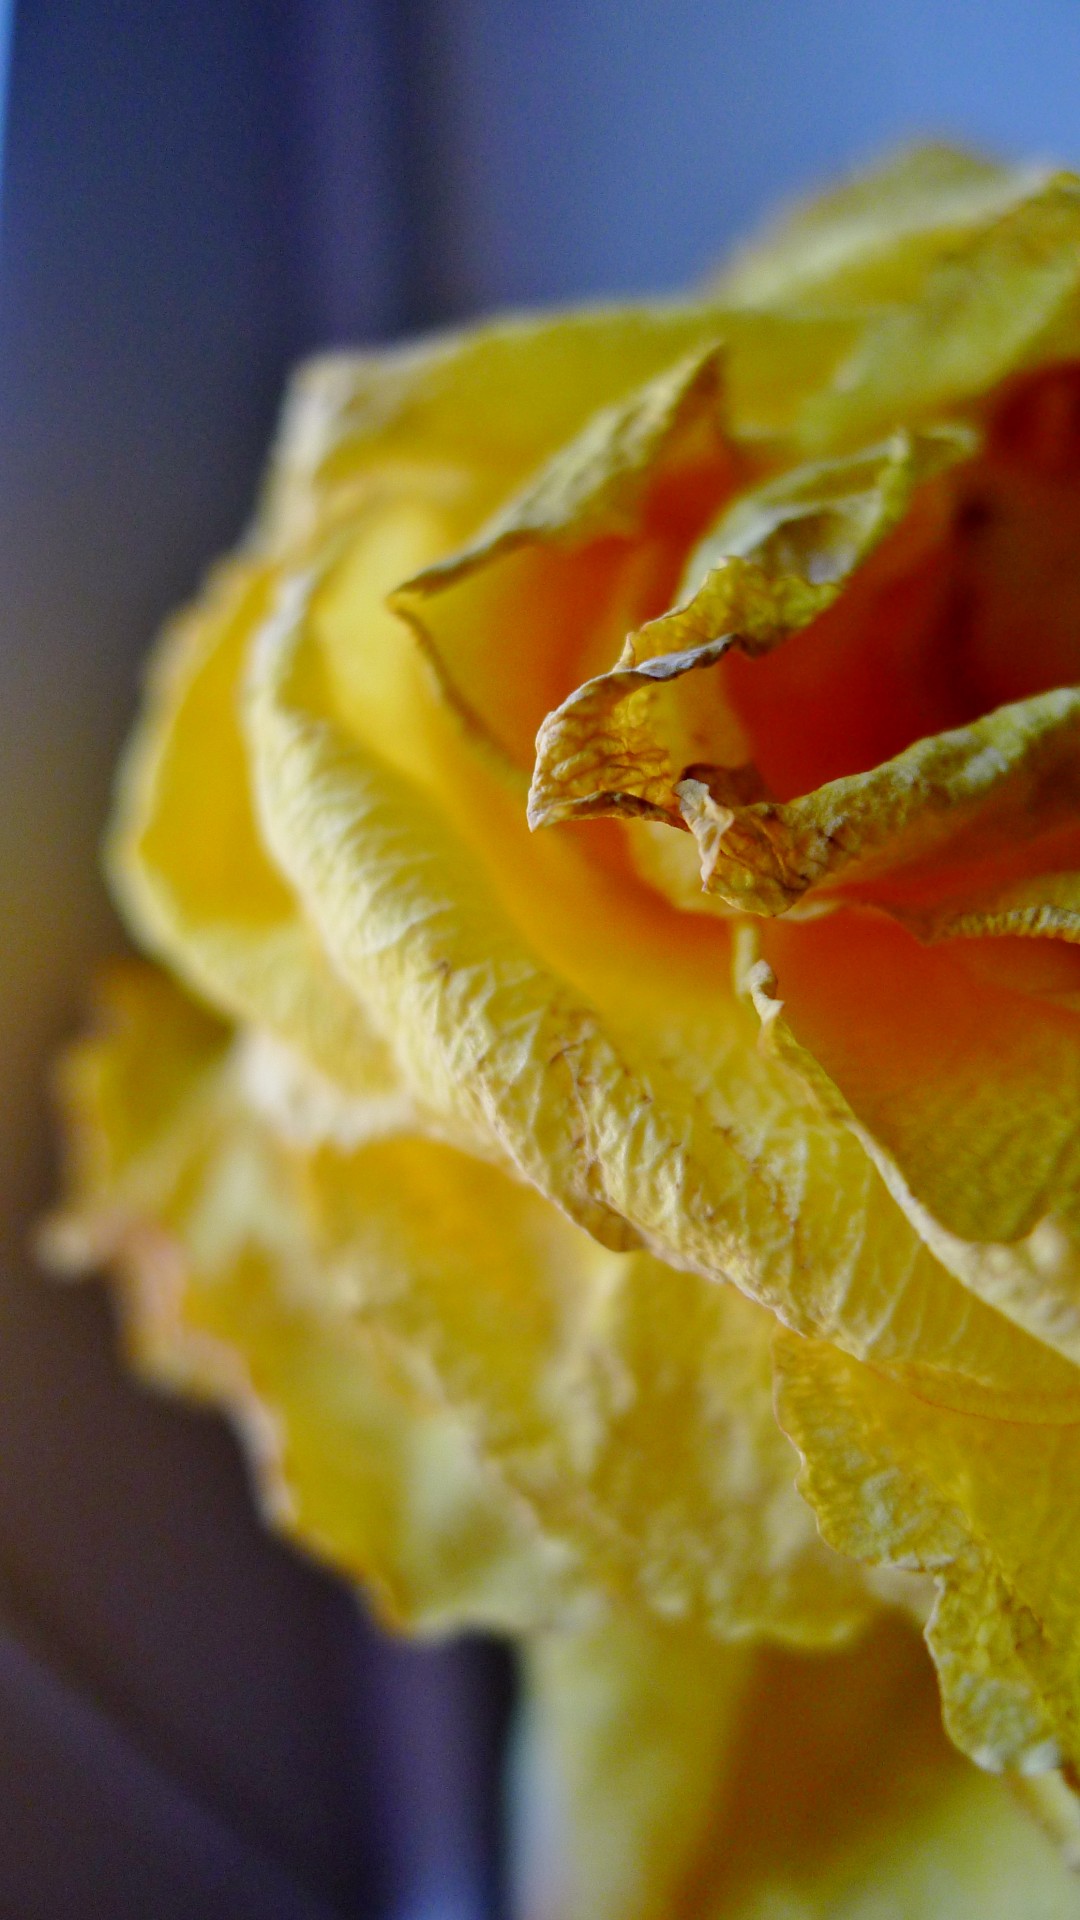 yellow flower petals free photo